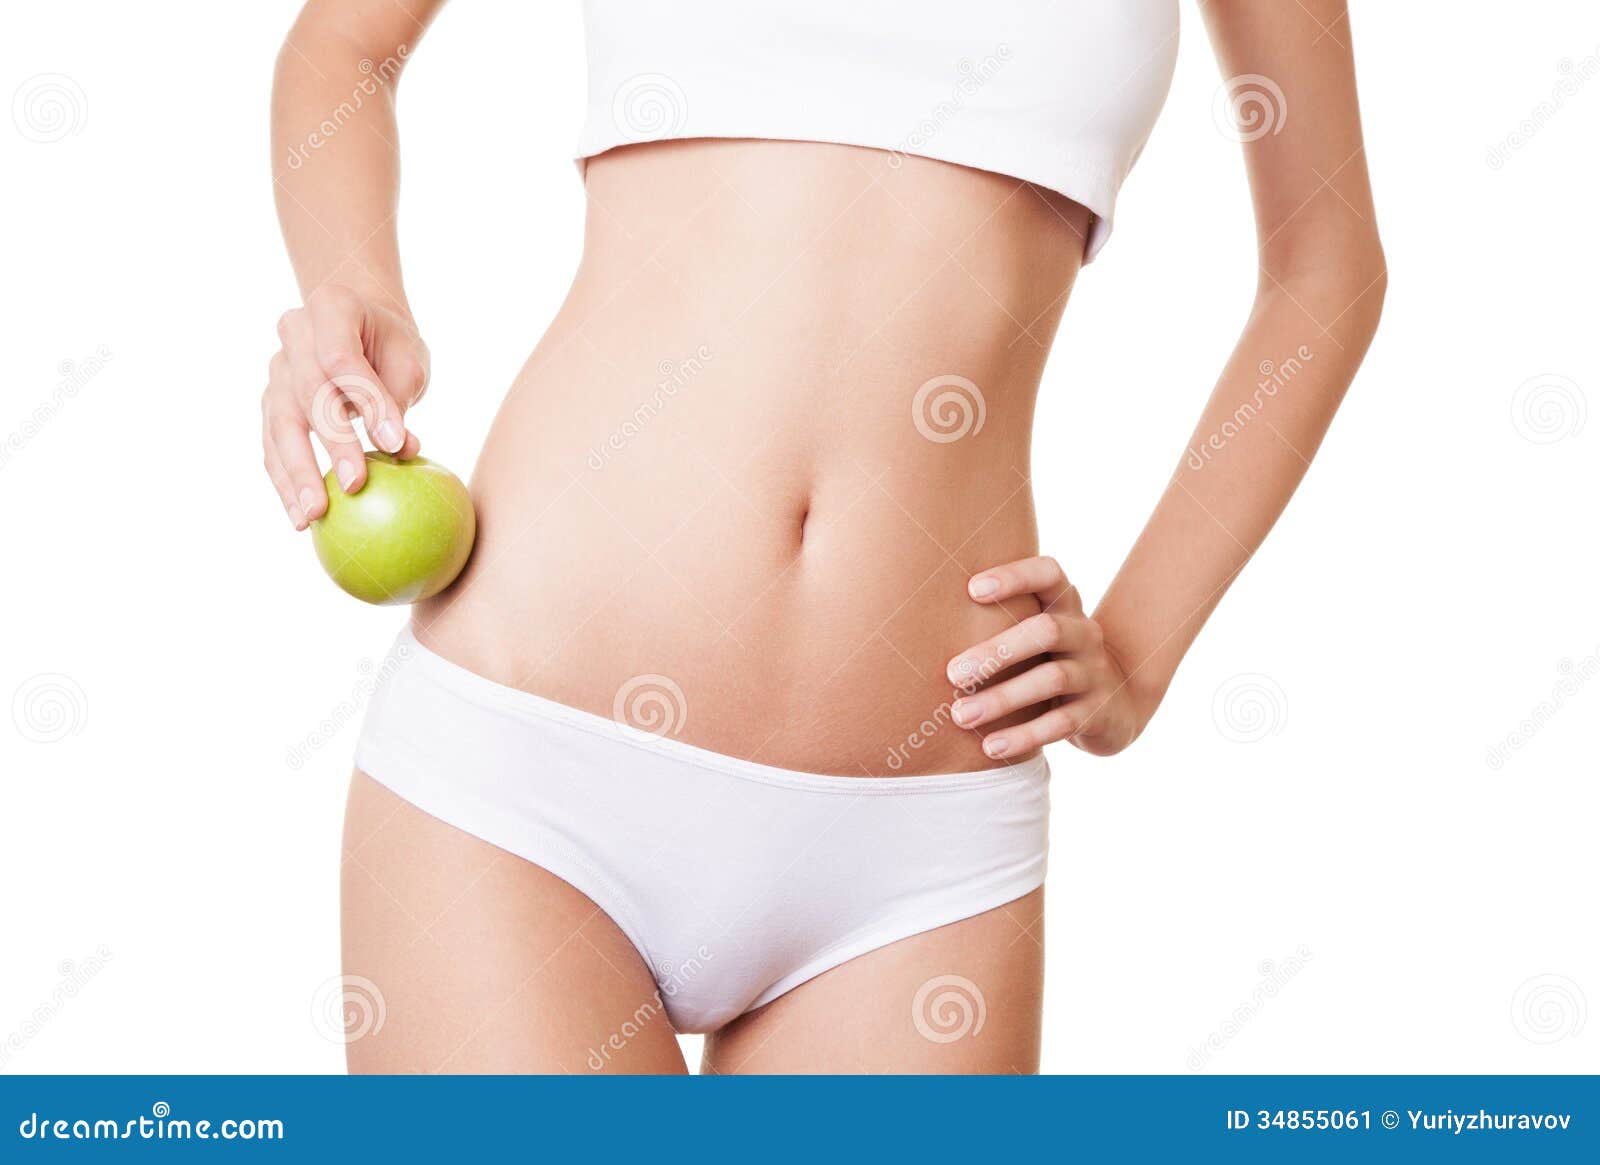 perfect-slim-woman-body-diet-concept-apple-34855061.jpg